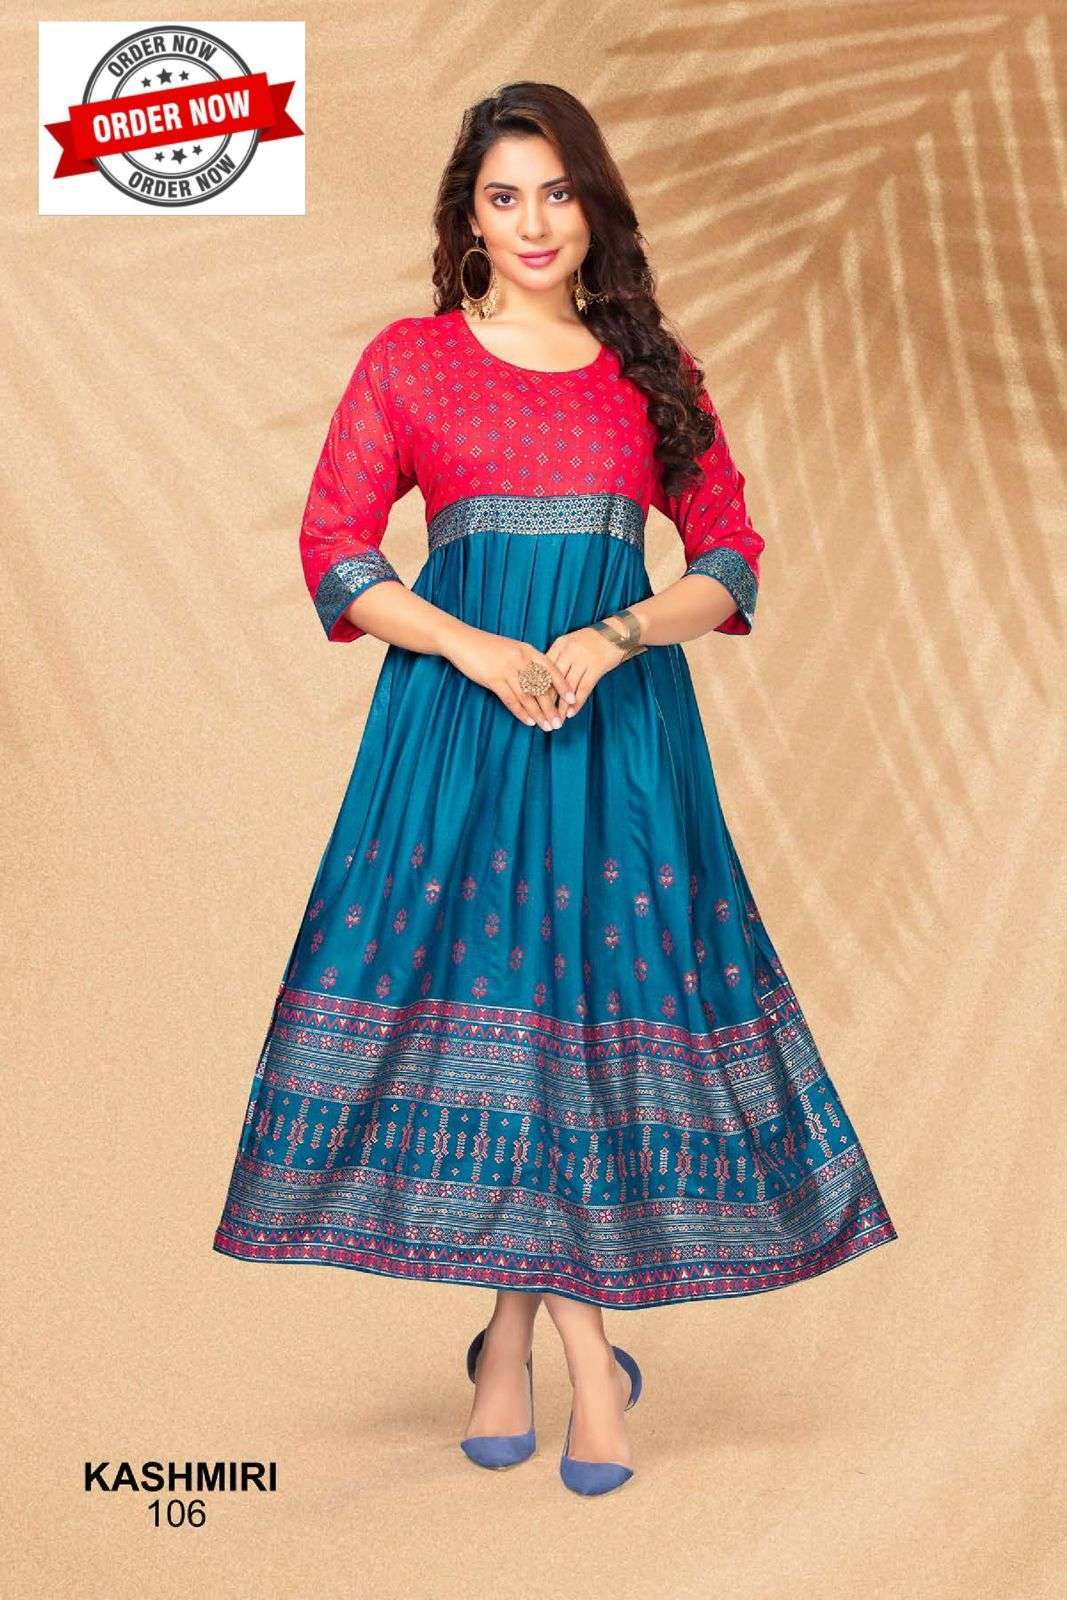 Buy SALALAH Design Long Kurti for Women | Kashmiri Aari Embroidery | Color  : Firozy (Large, Firozy) at Amazon.in